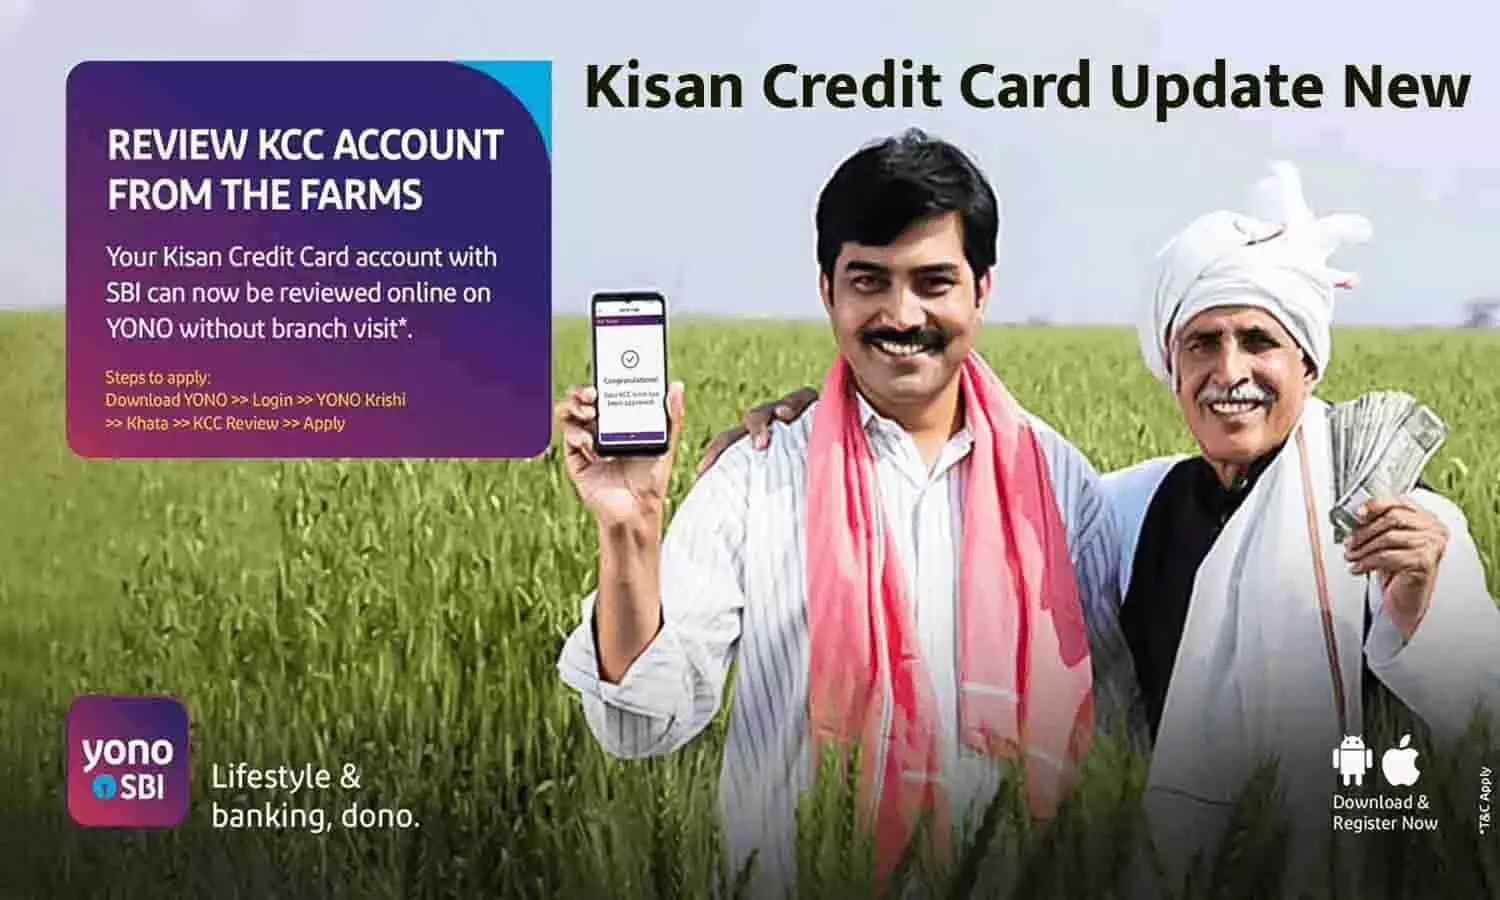 Kisan Credit Card Update New